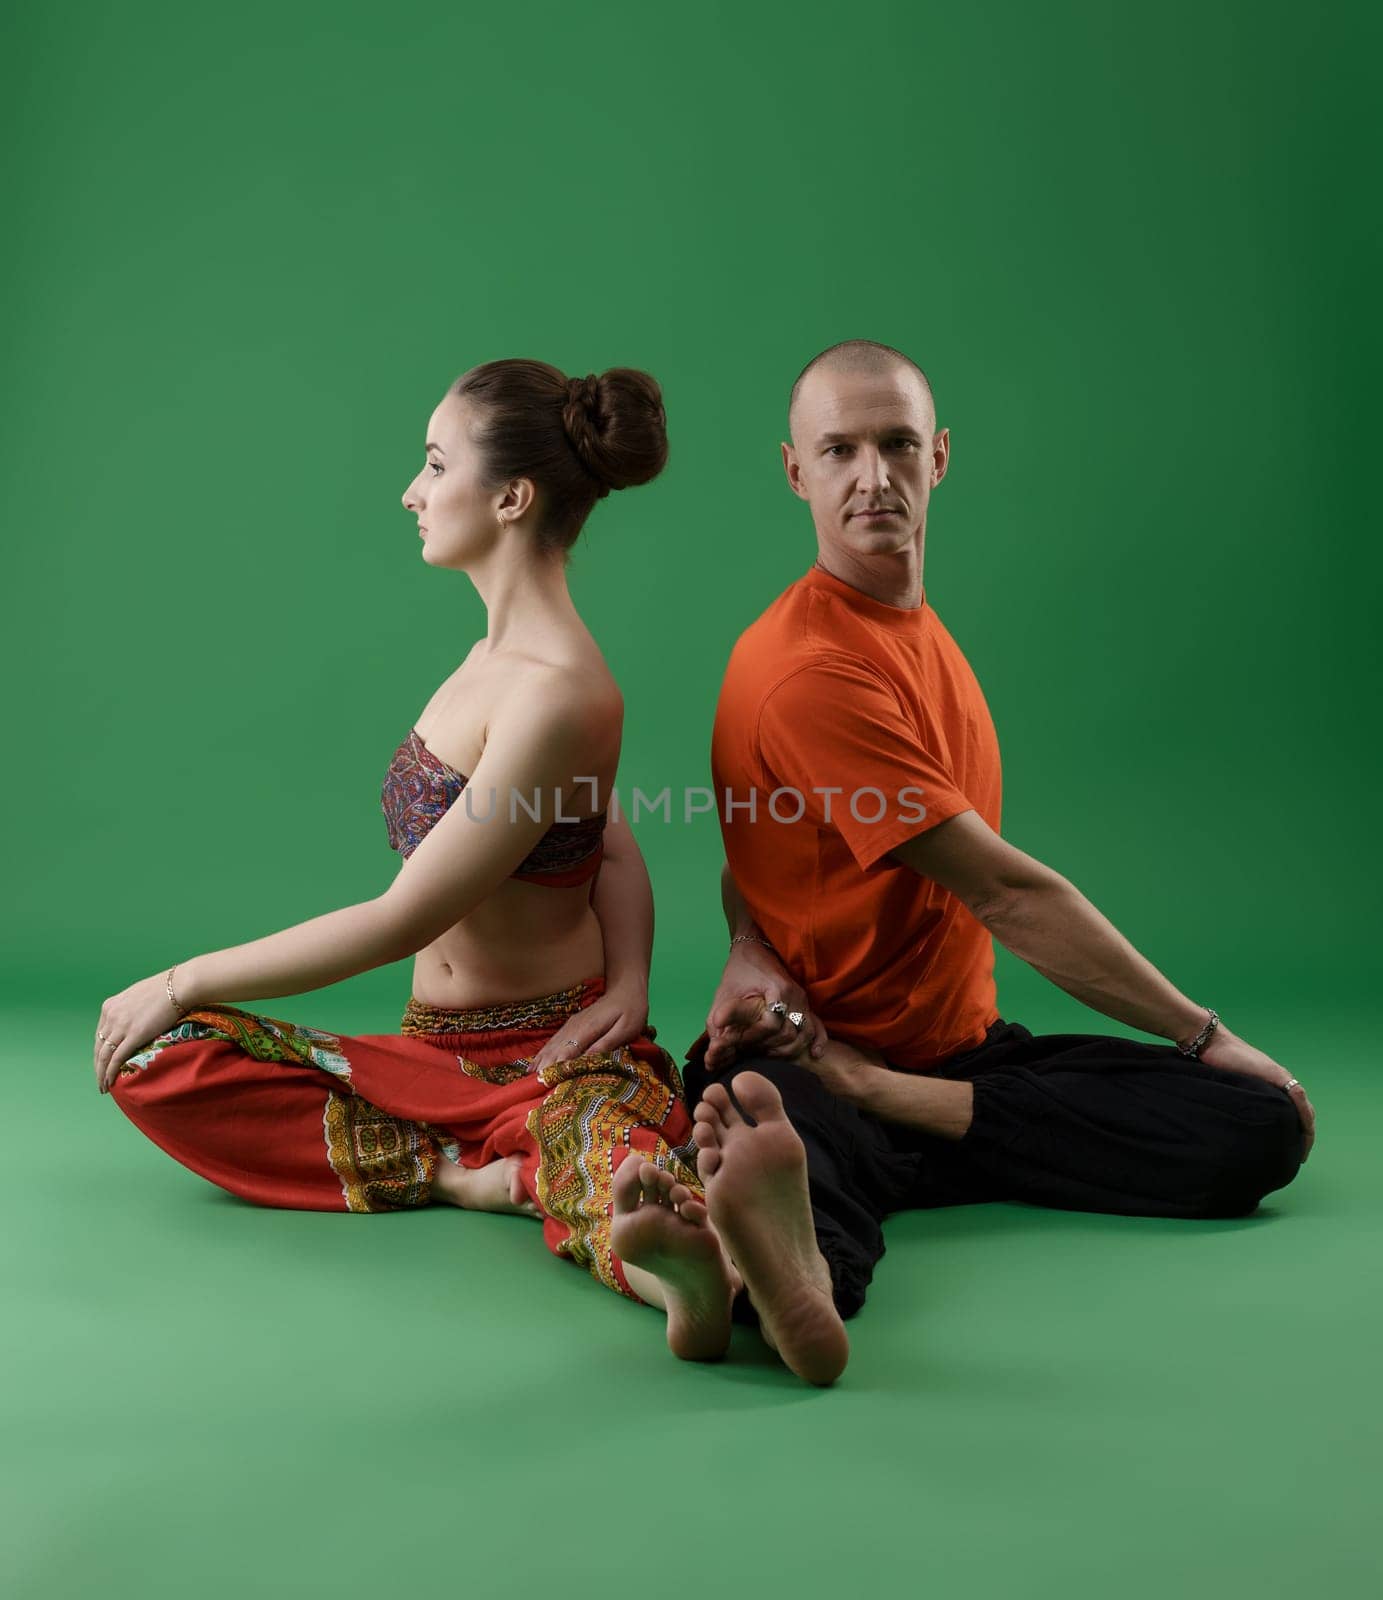 Man and woman practicing yoga in pair. Studio image